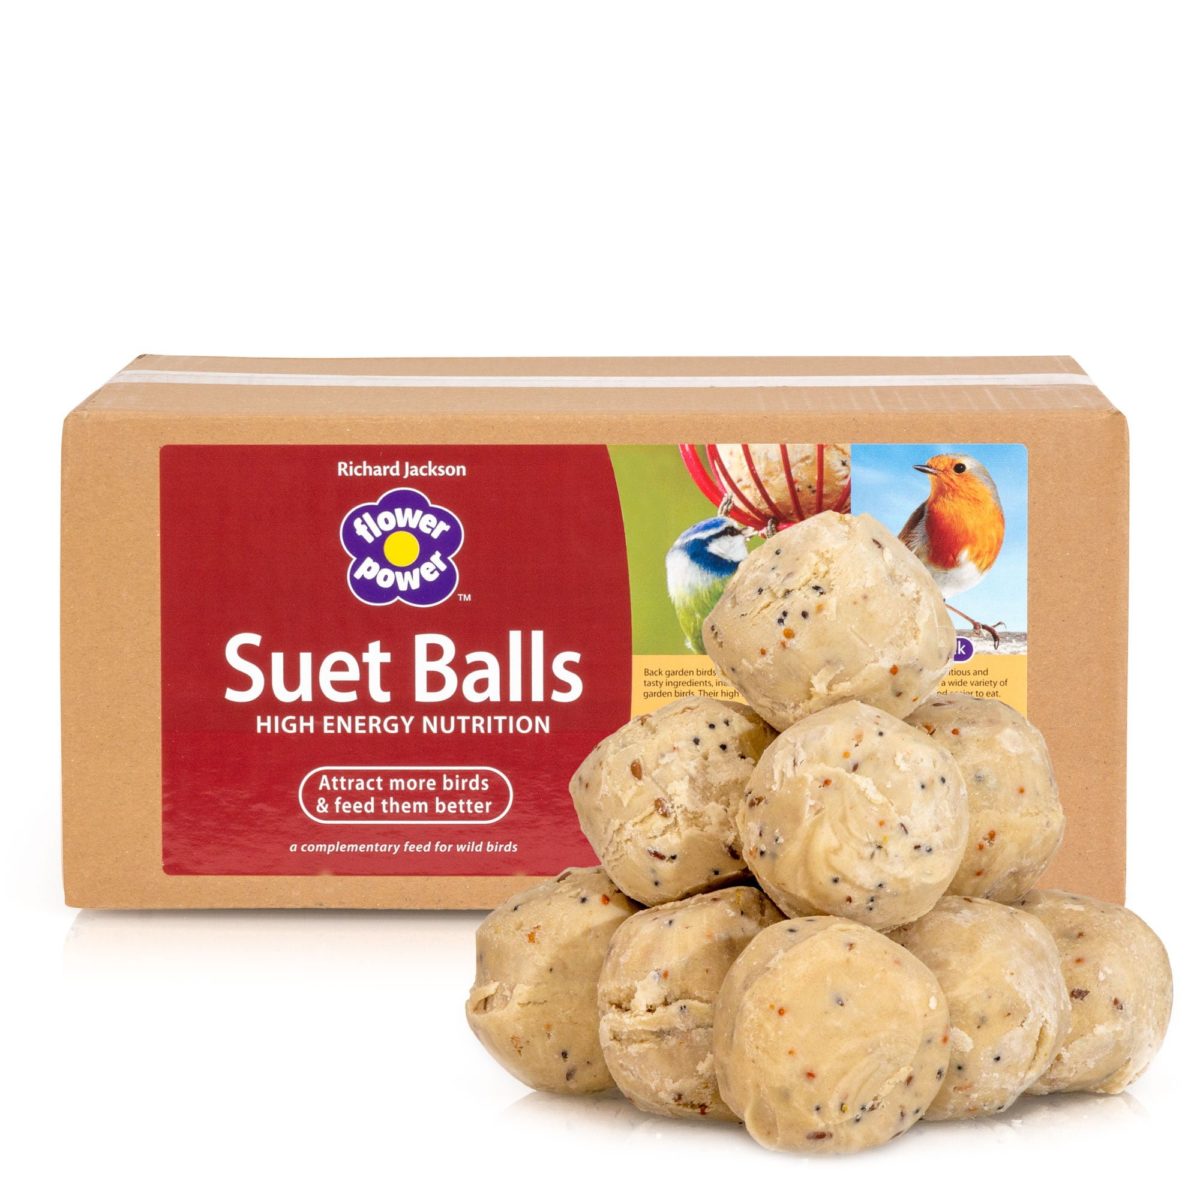 Suet Balls by Richard Jackson box of 50 suet balls